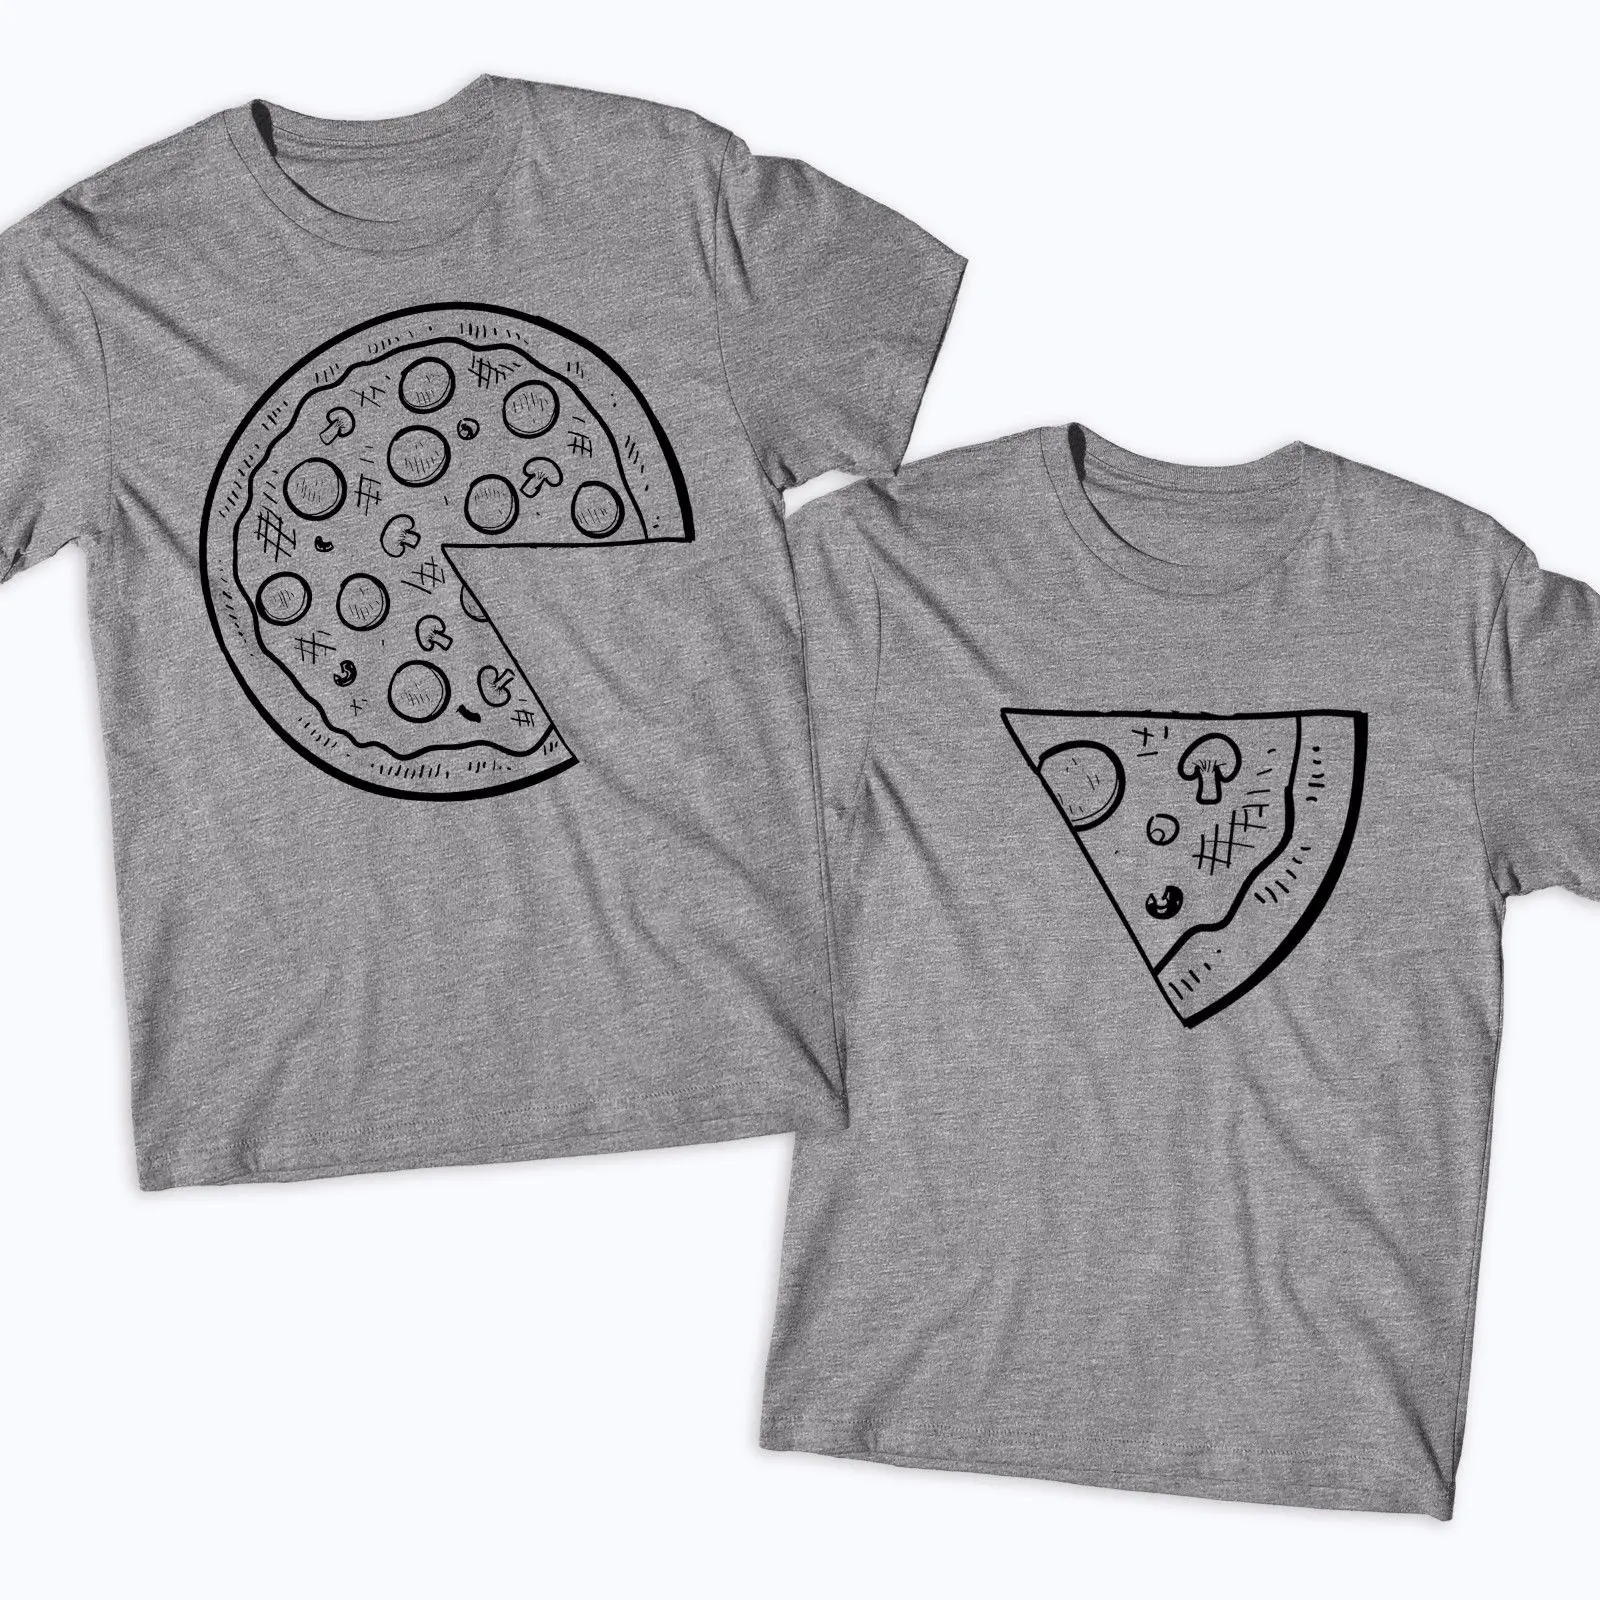 Одинаковая футболка для пиццы парная валентинка еда любовь лучшие друзья Wifey Hubby